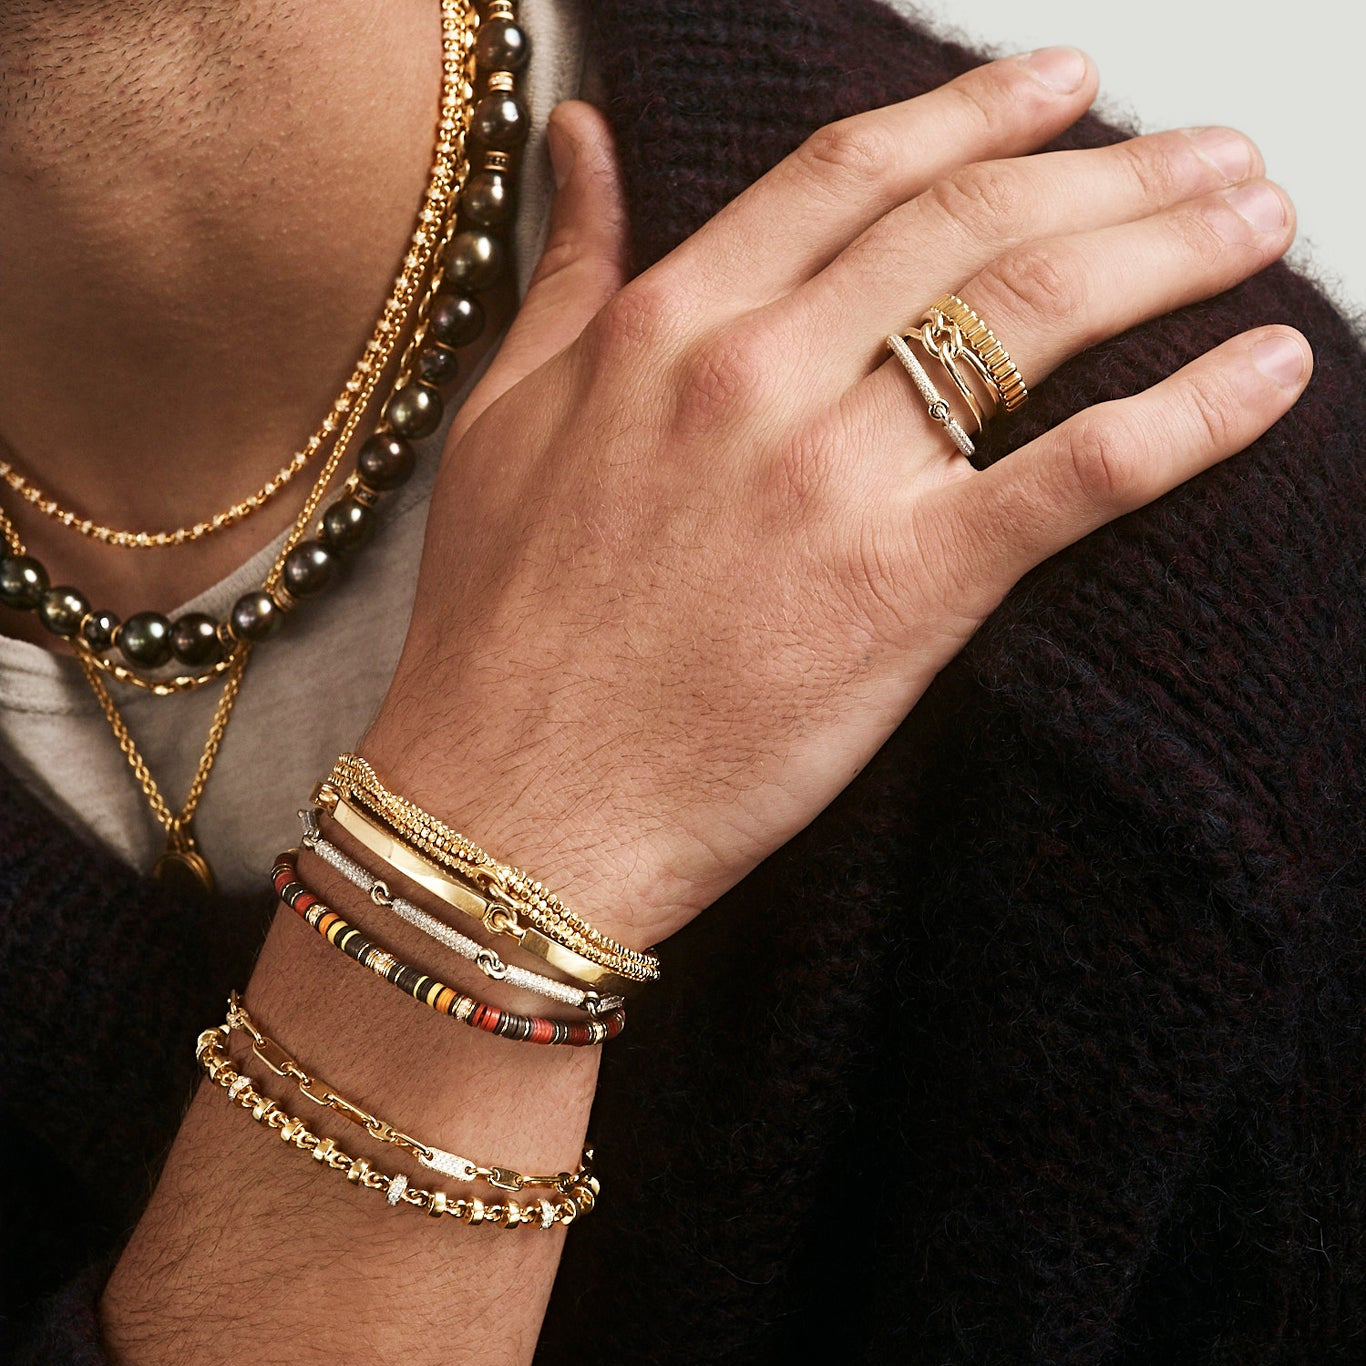 Maor fine jewelry orion bracelet pave yellow gold